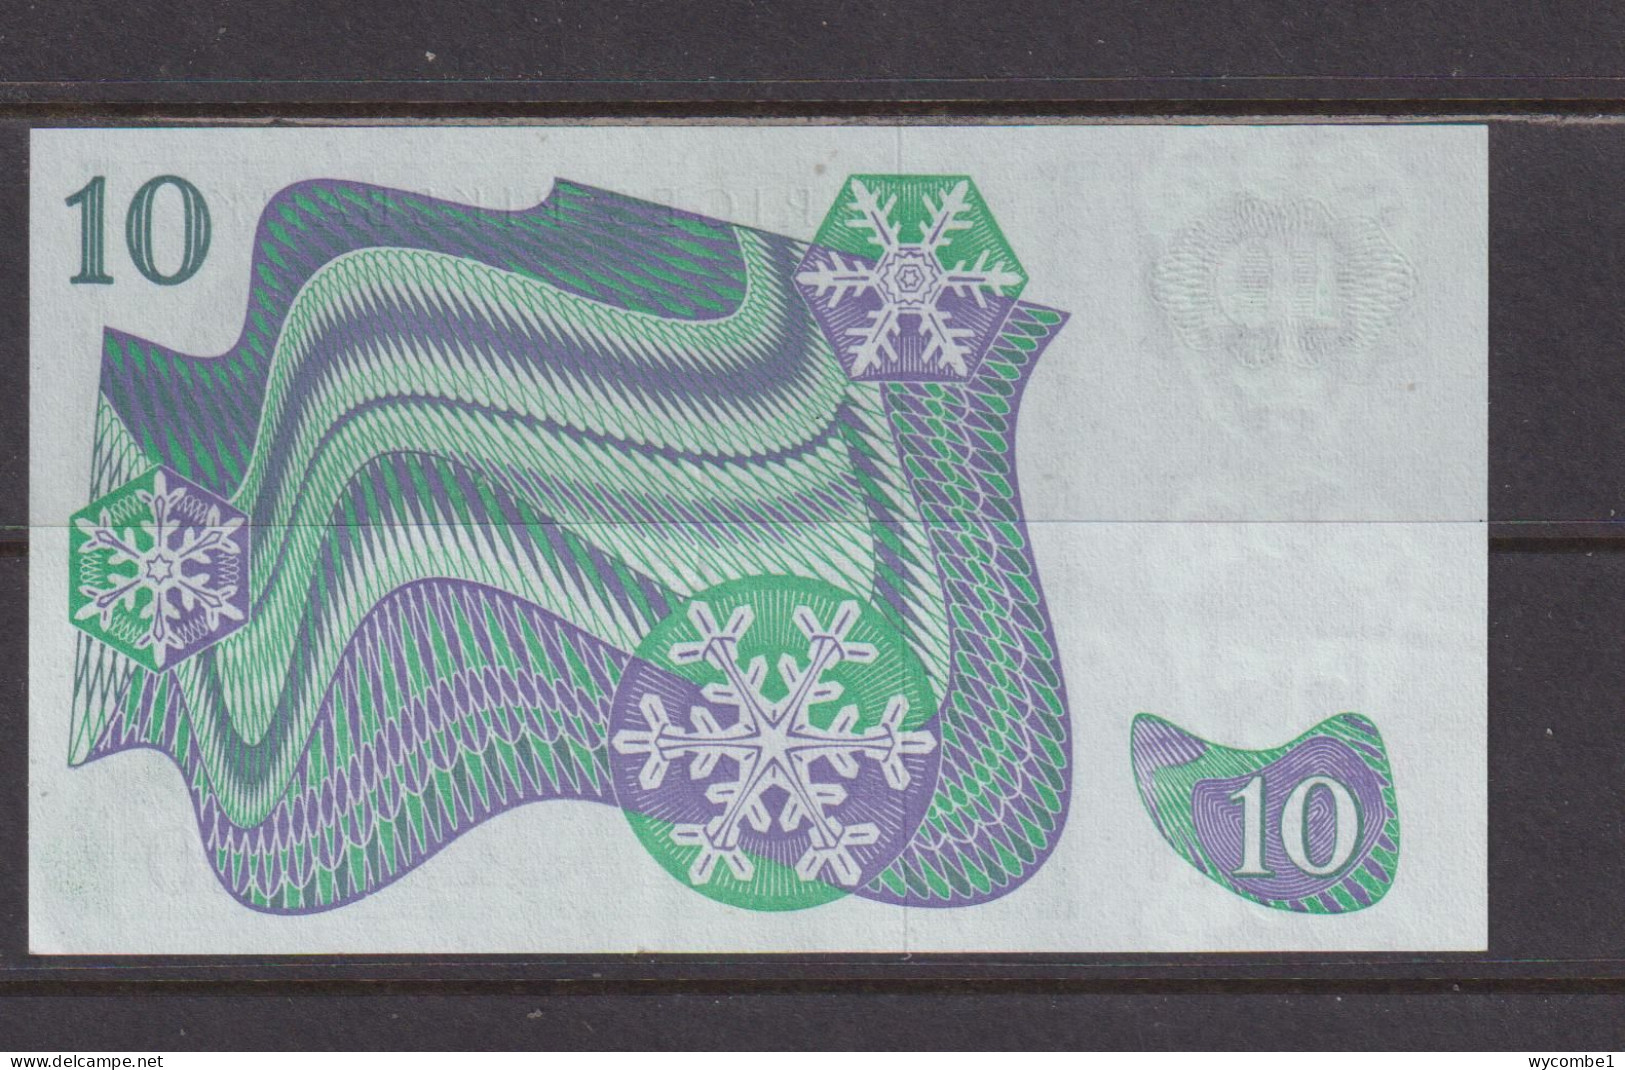 SWEDEN - 1963 10 Kronor XF Banknote As Scans - Sweden